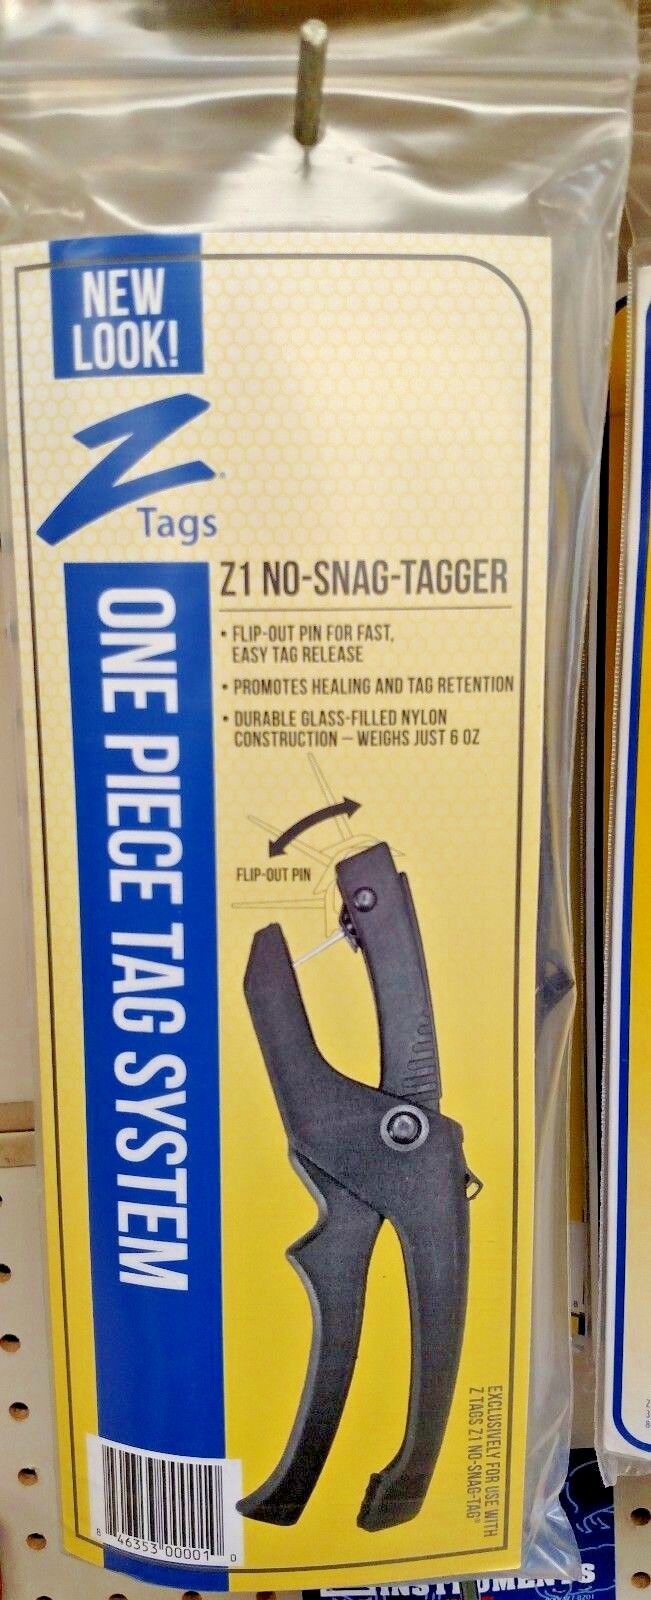 Z Tags Applicator Z1 No Snag Tagger 